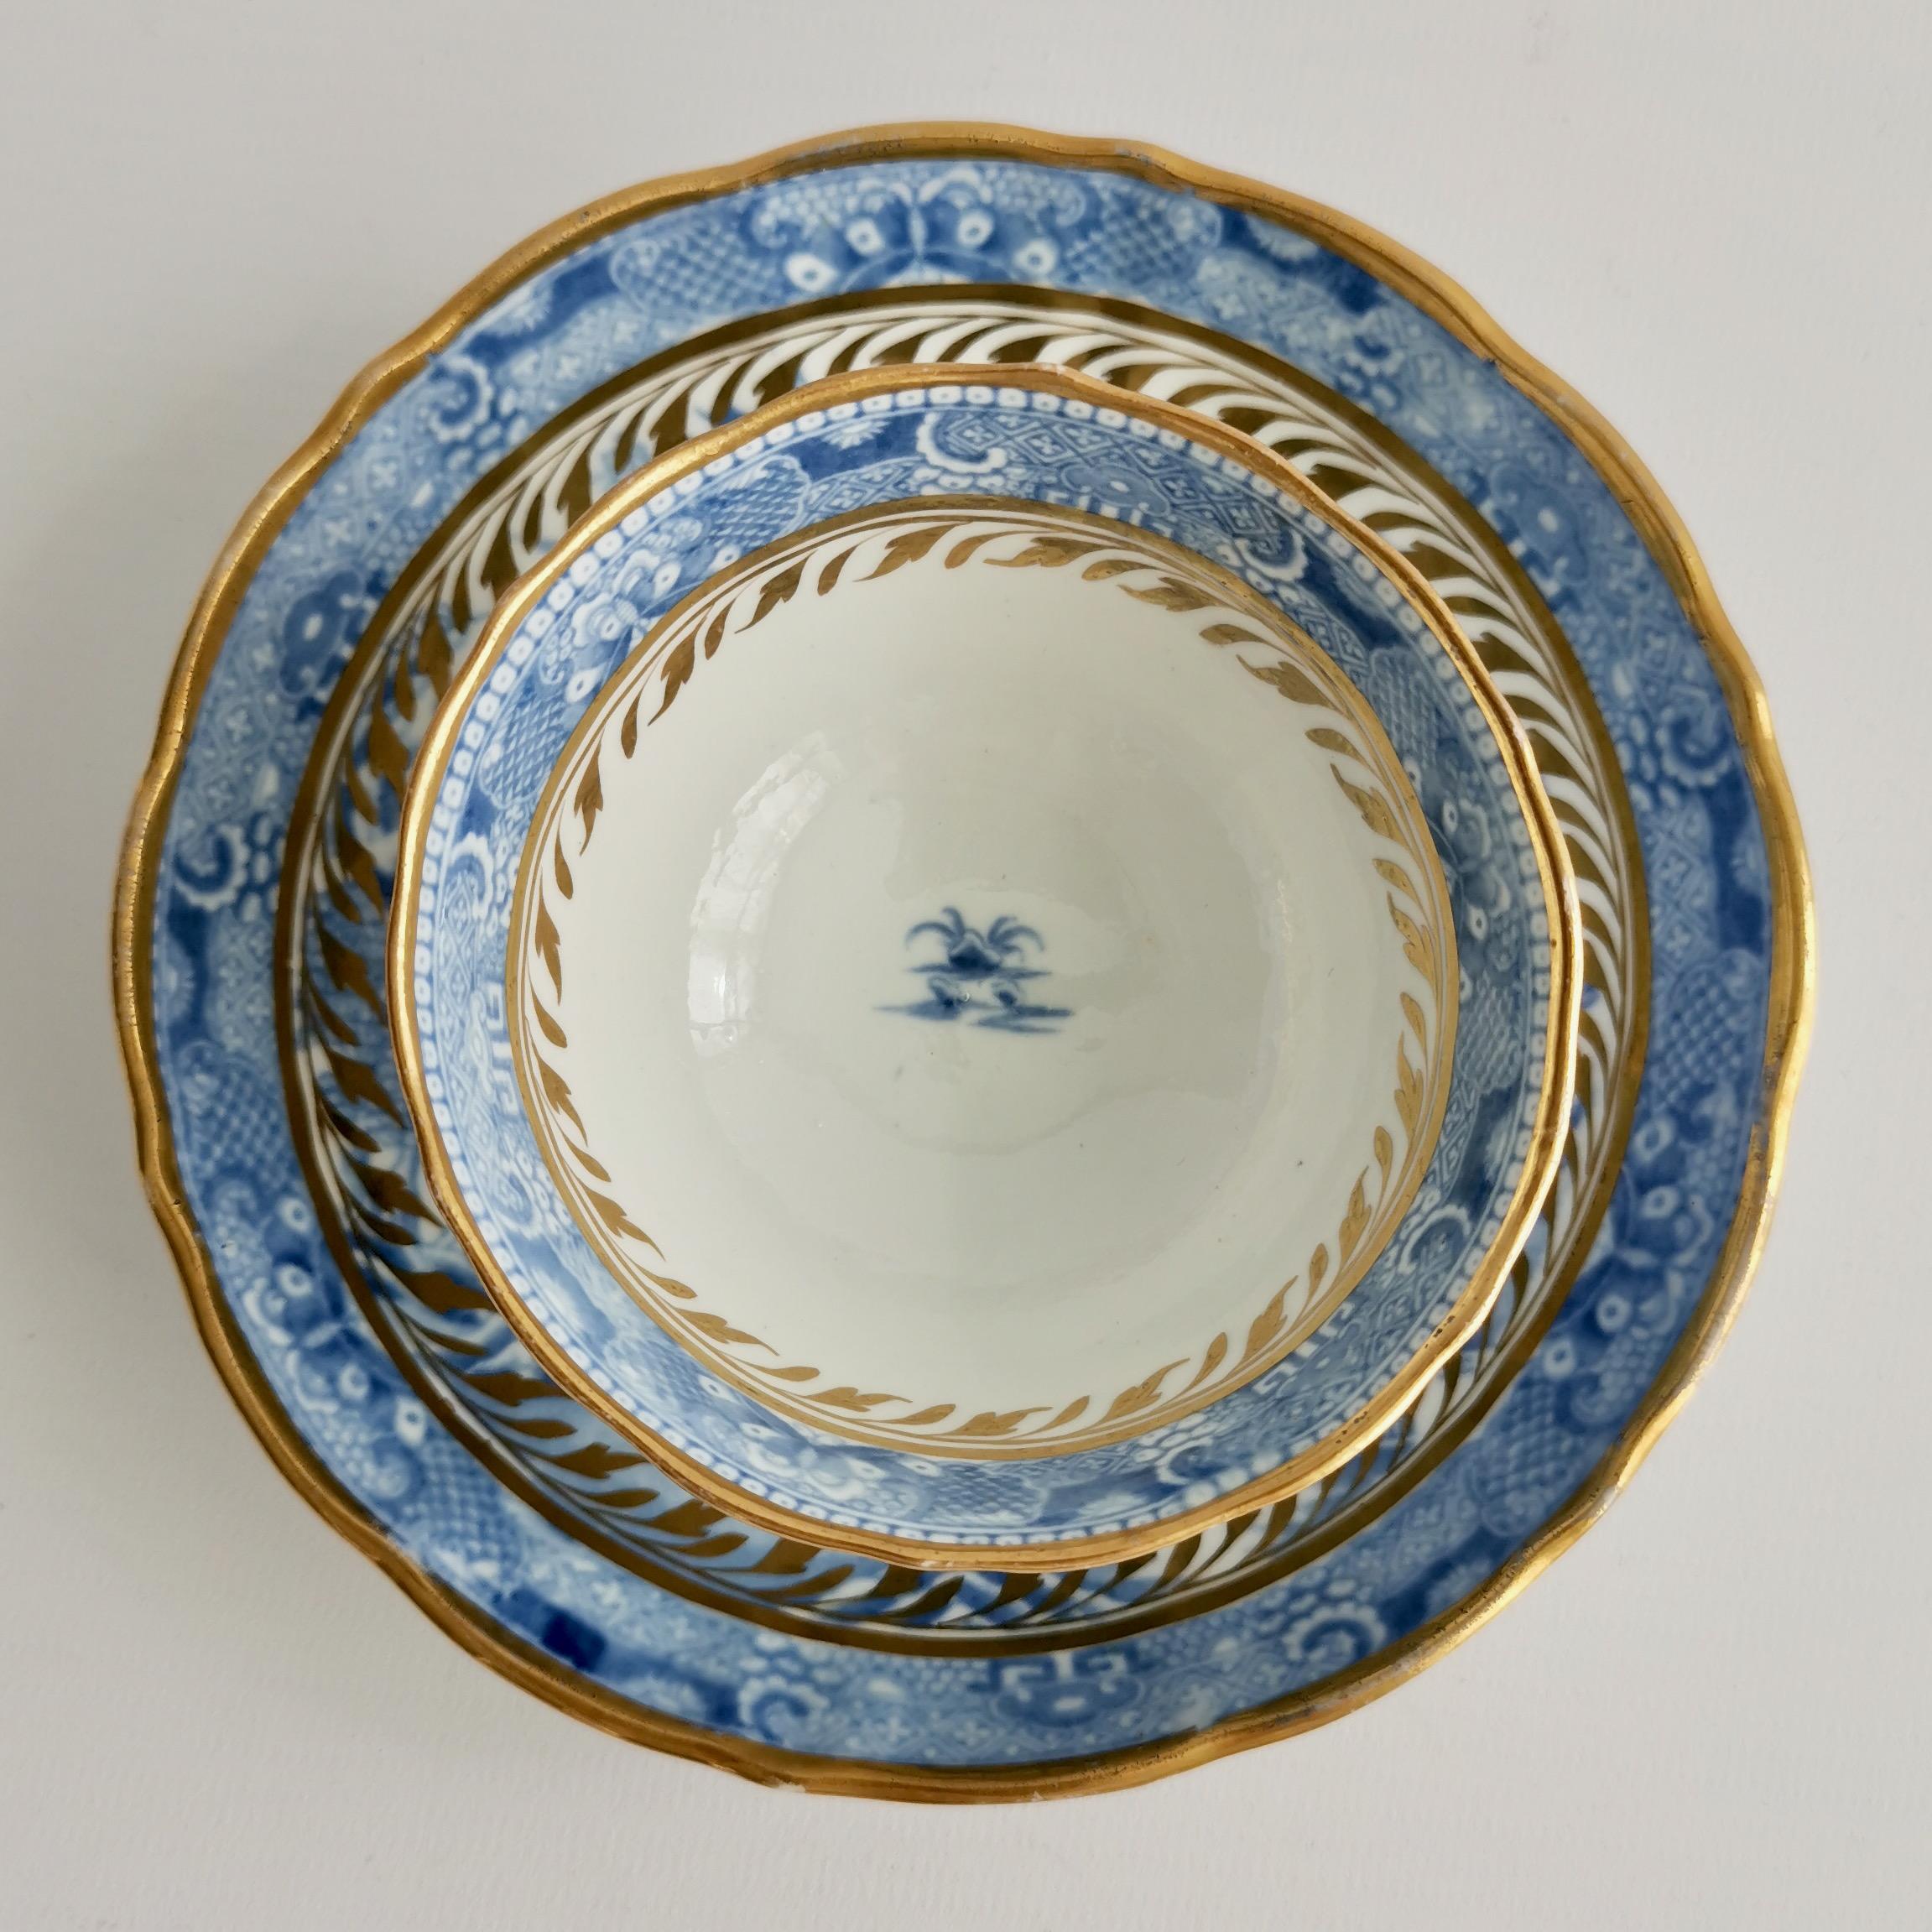 Early 19th Century Miles Mason Porcelain Teacup Trio, Pagoda Pattern Blue White Transfer, ca 1810